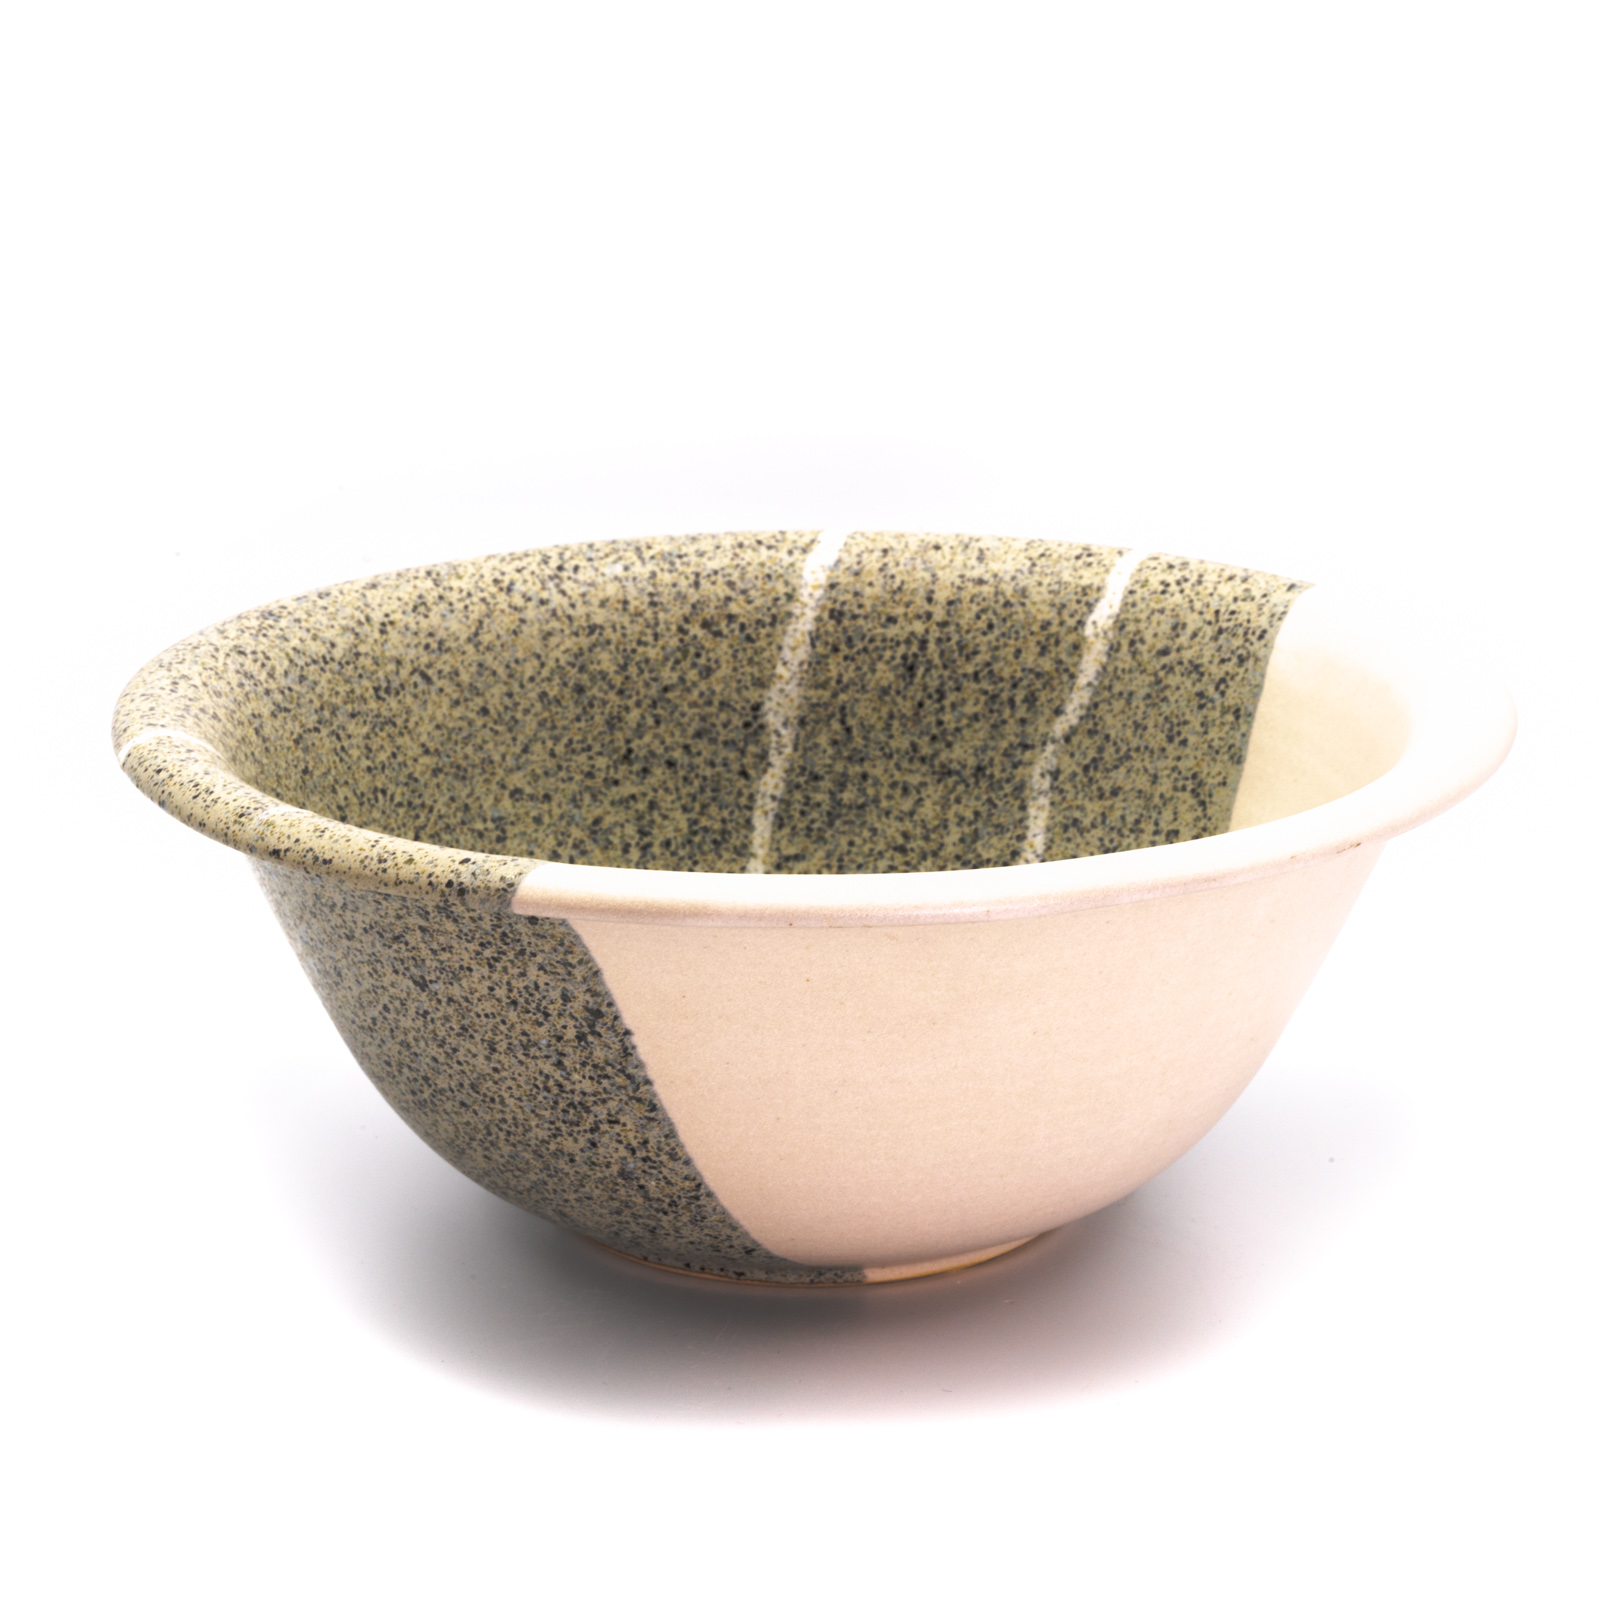 Salatschüssel Keramik | mittelgroße Salatschale | Schüssel